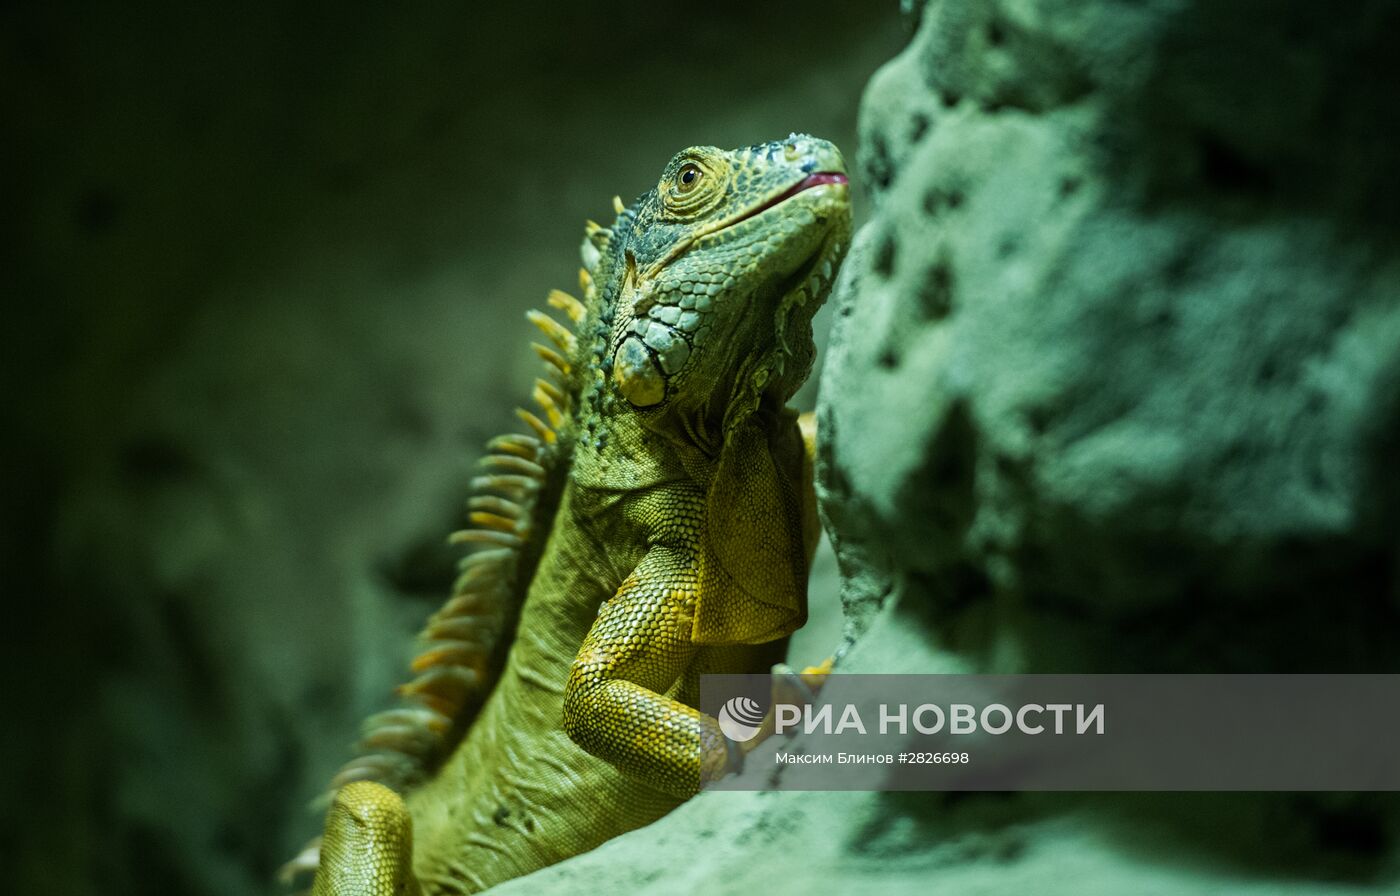 Террариум Московского зоопарка